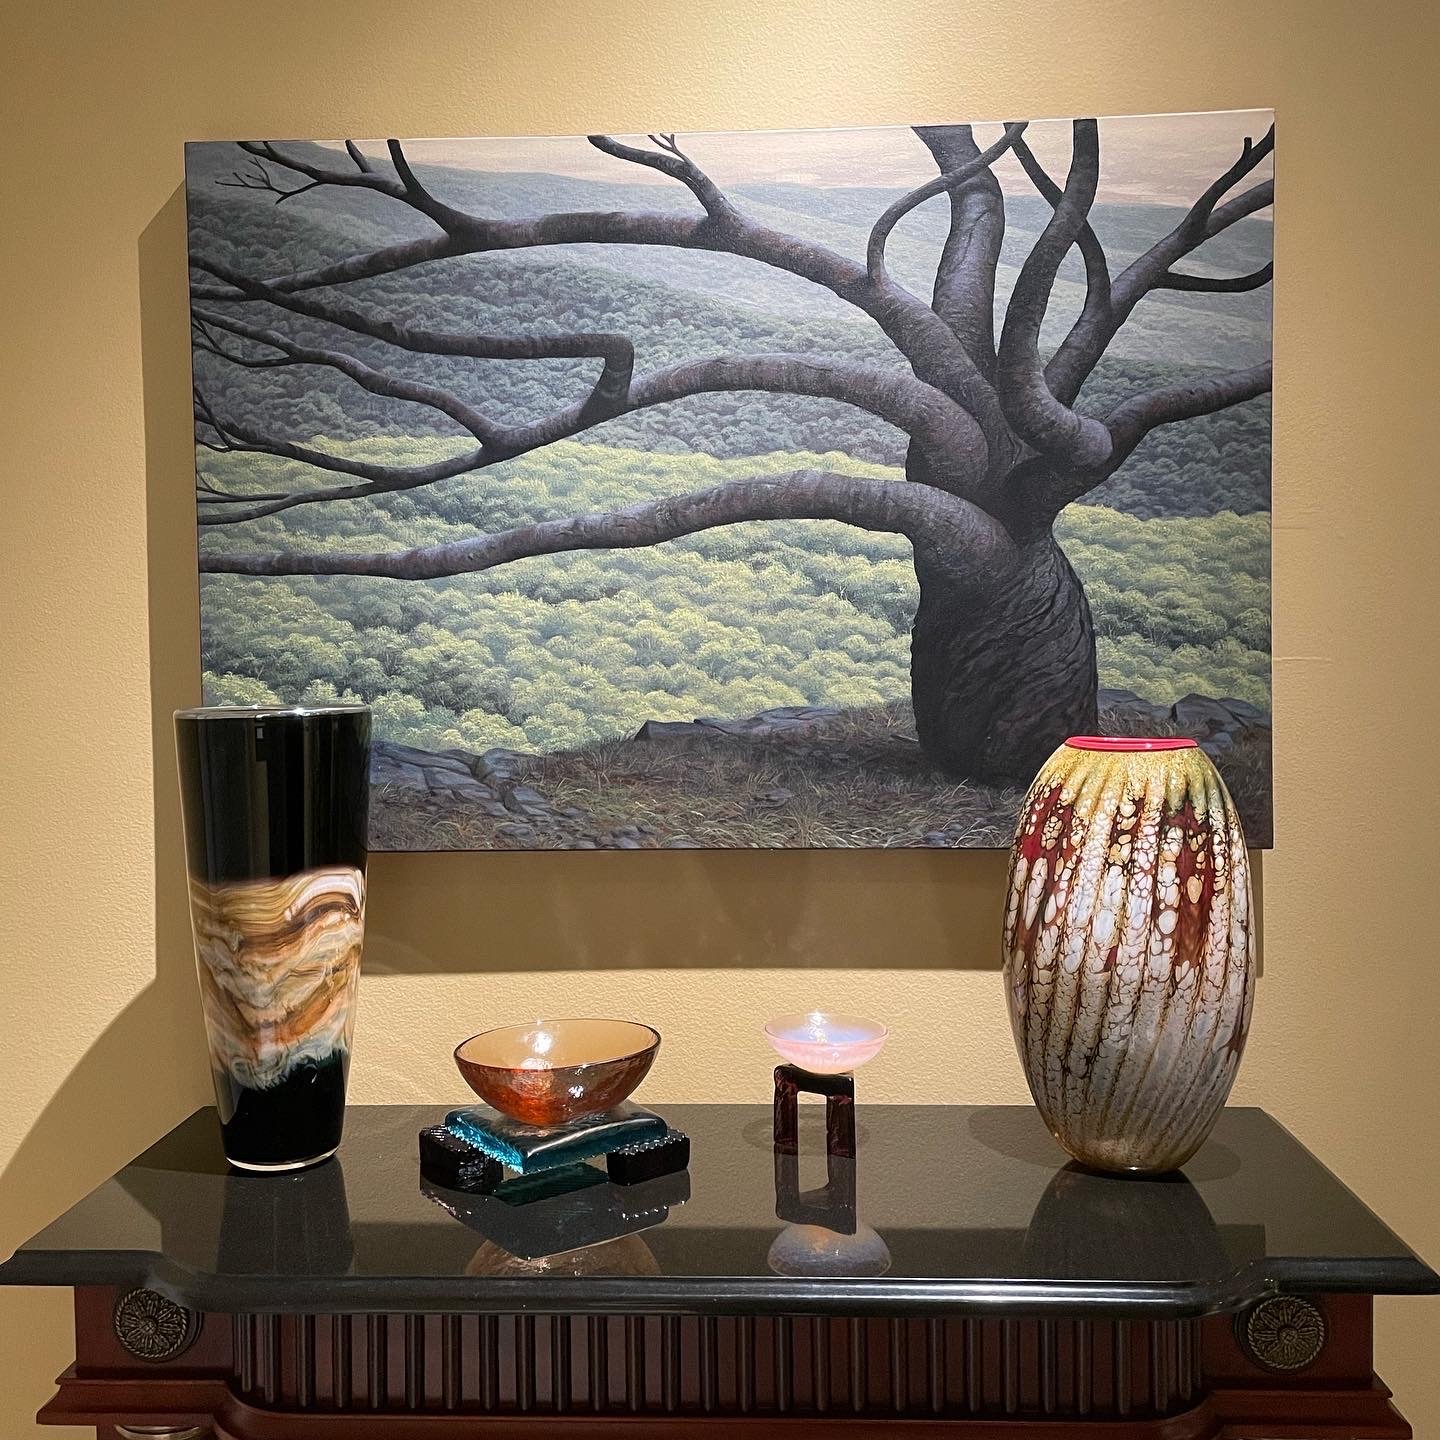    Window  , 24” x 36”, acrylic on canvas, Kendall Stallings 